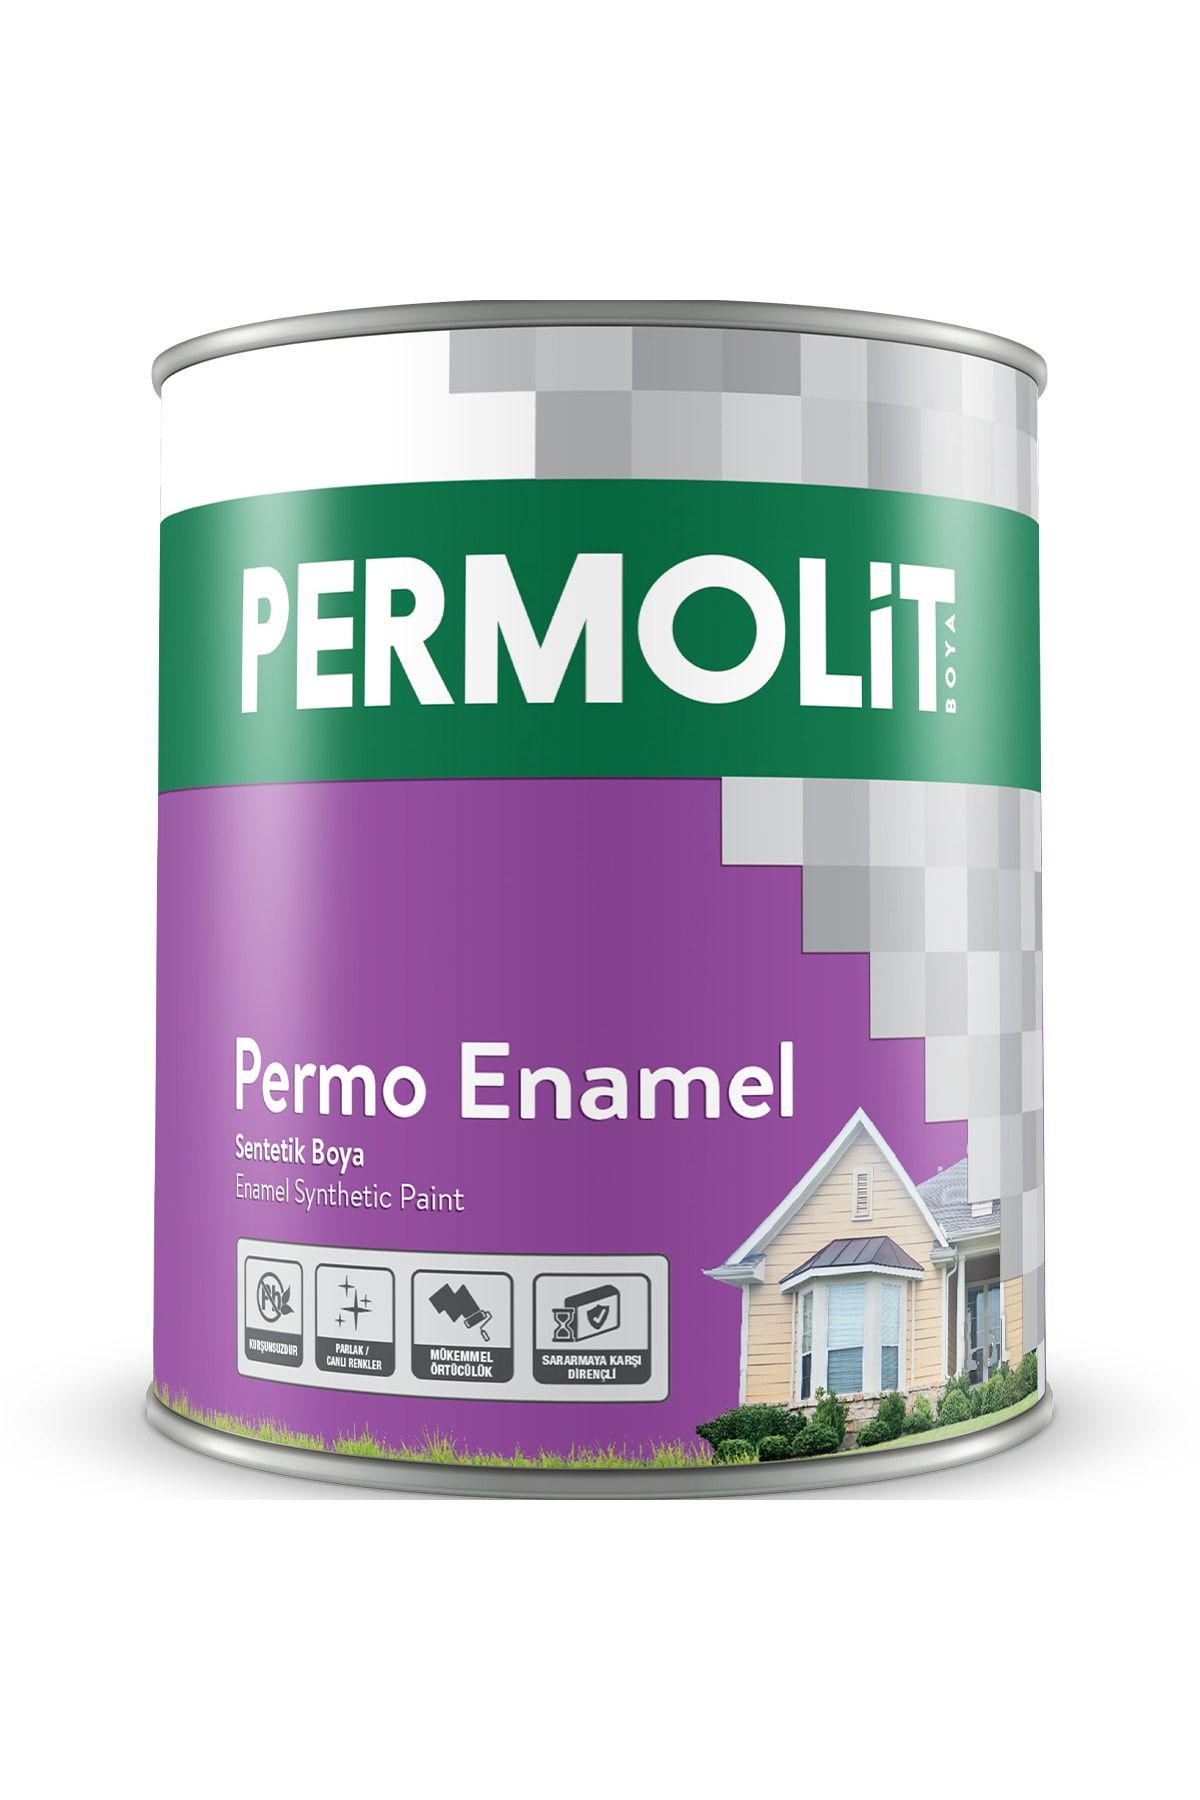 Permolit Permo Enamel Lacivert Sentetik Boya 0,75 Lt. 35 Farklı Renk